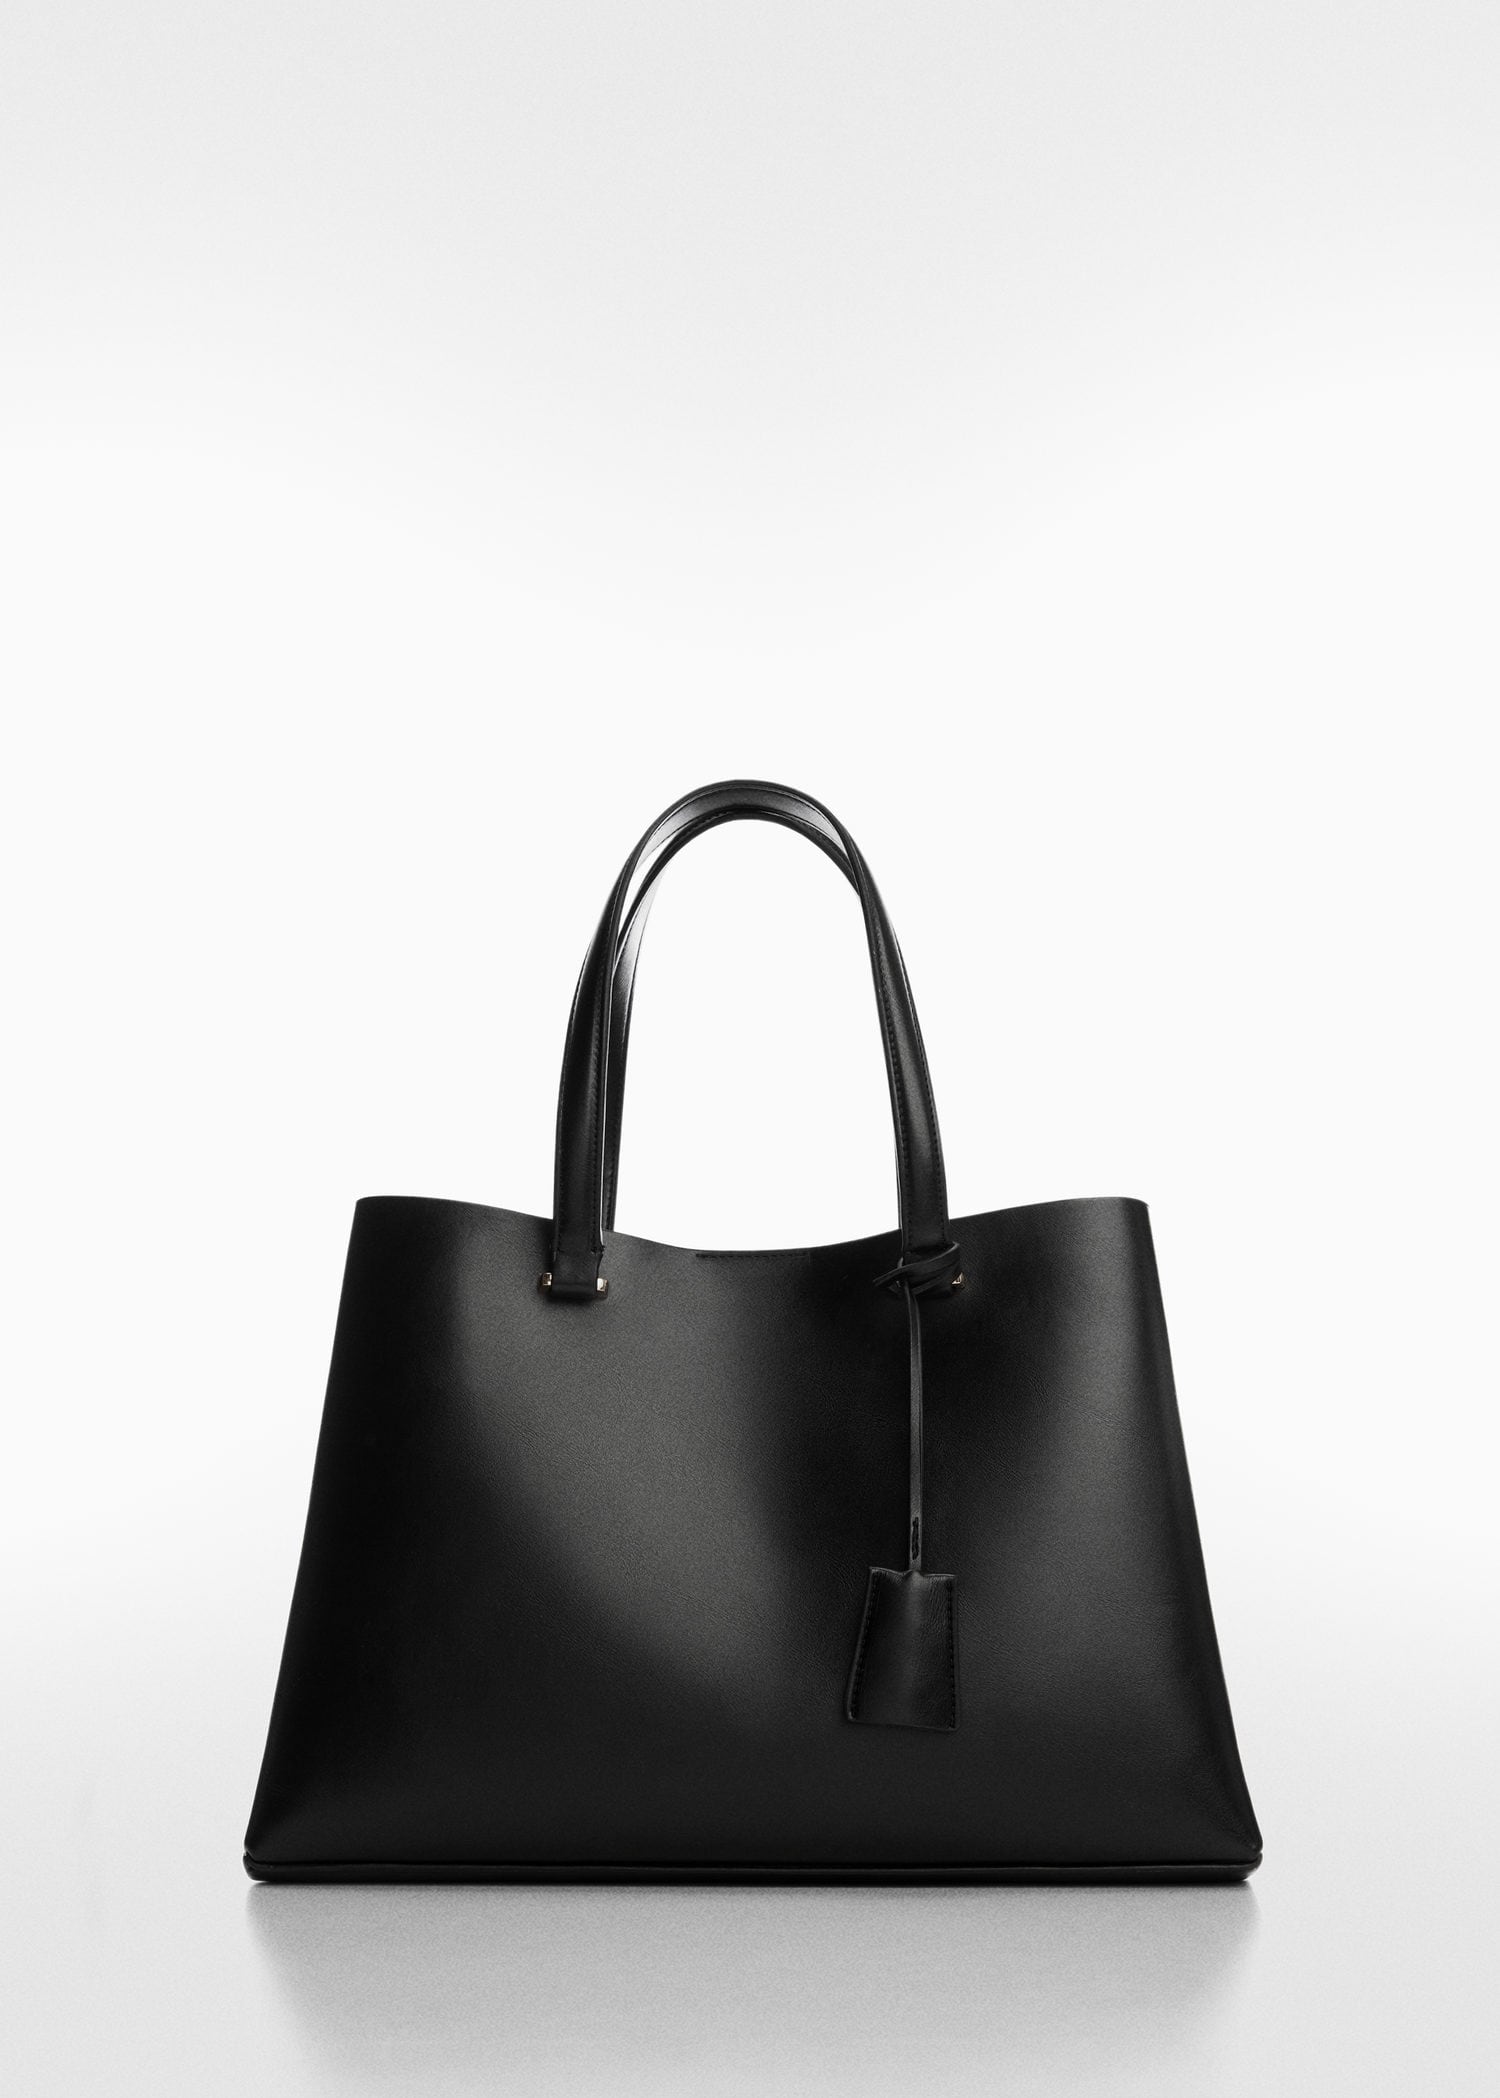 Buy DOURR Hobo Handbags Canvas Crossbody Bag for Women, Multi Compartment  Tote Purse Bags, Beige - Medium, Medium at Amazon.in